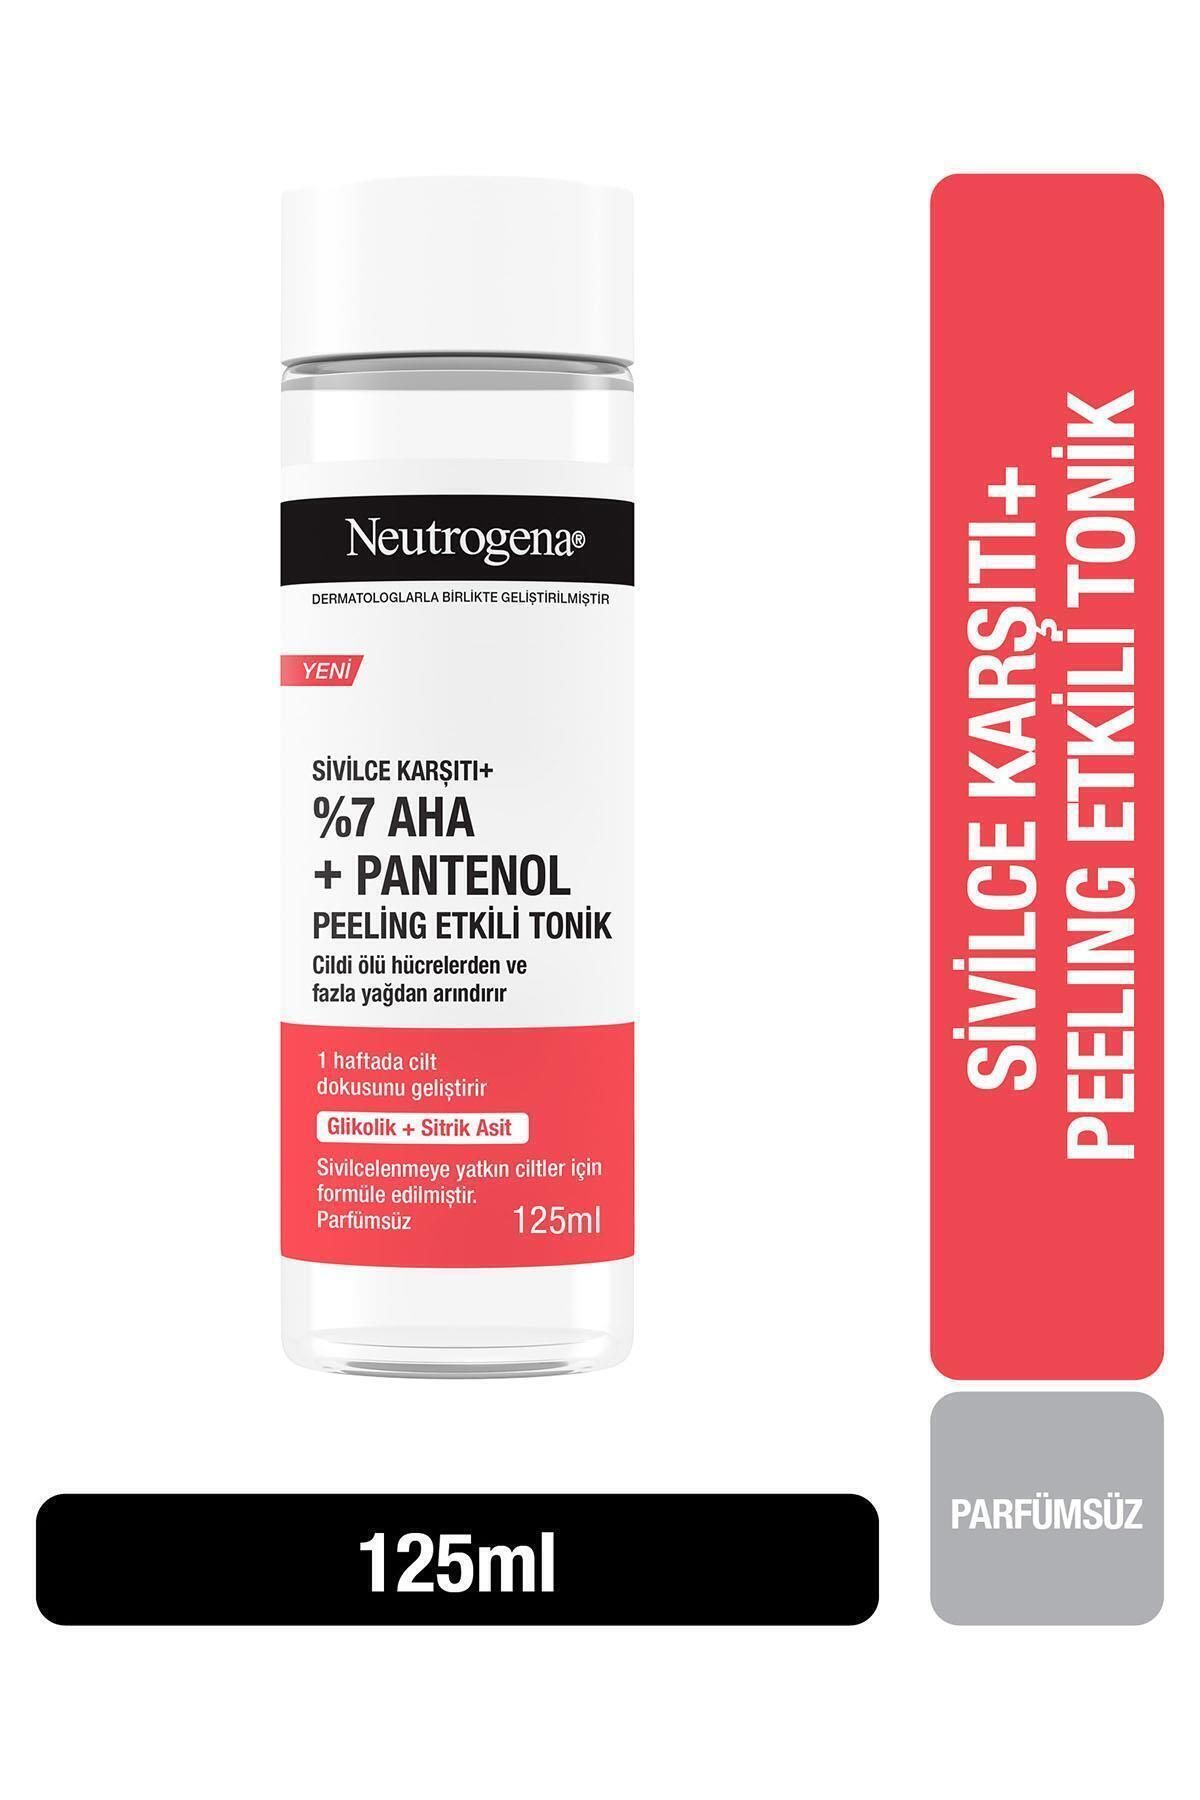 Neutrogena Sivilce Karşıtı Plus Peeling Etkili Tonik Glikolik + Sitrik asit 100ml PR